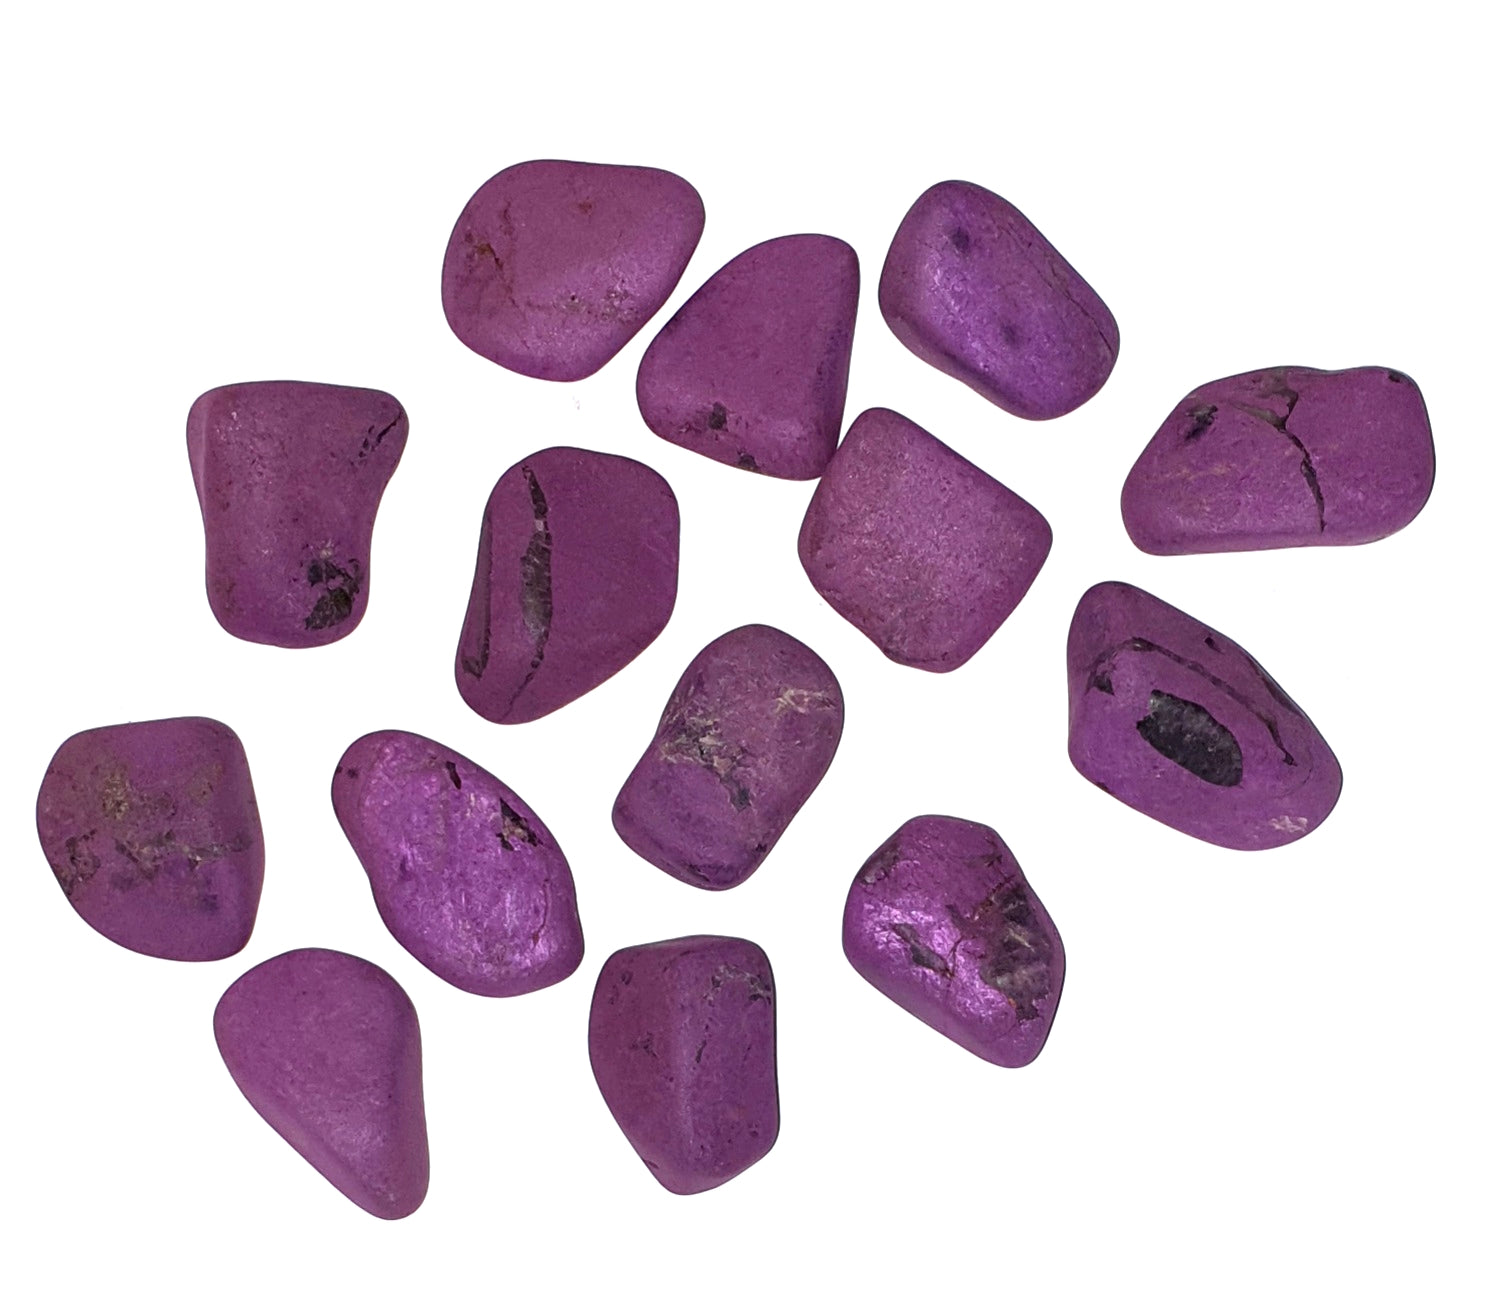 Purpurite Polished Healing Crystal Tumble Stone